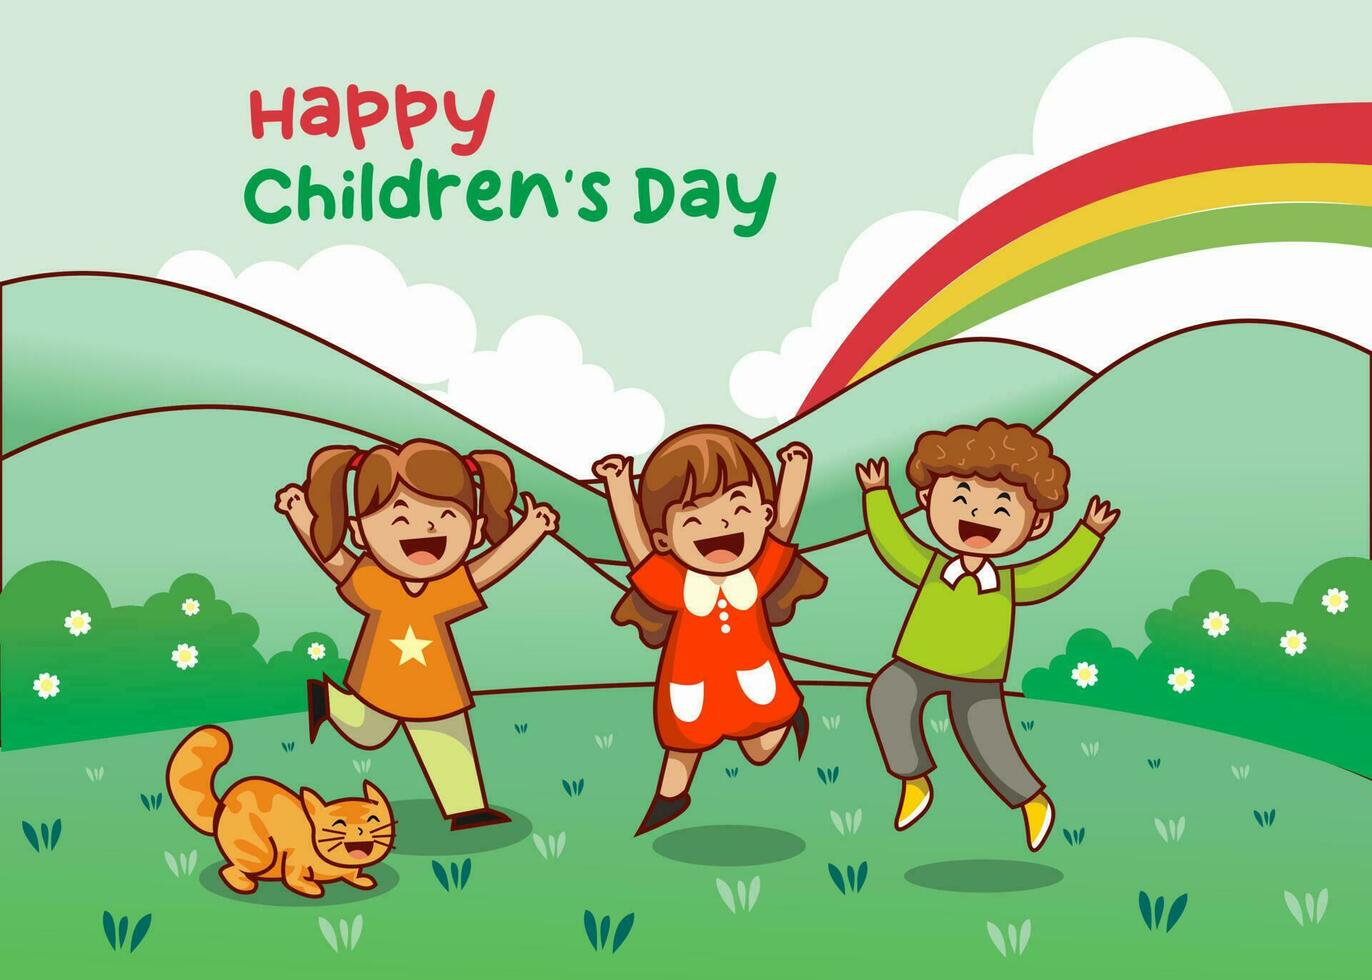 Welt Kinder- Tag Poster, Kinder- Tag Banner, wenig Junge Charakter, Karikatur drei wenig Kinder spielen im das Park mit Katze, Karikatur Hintergrund vektor